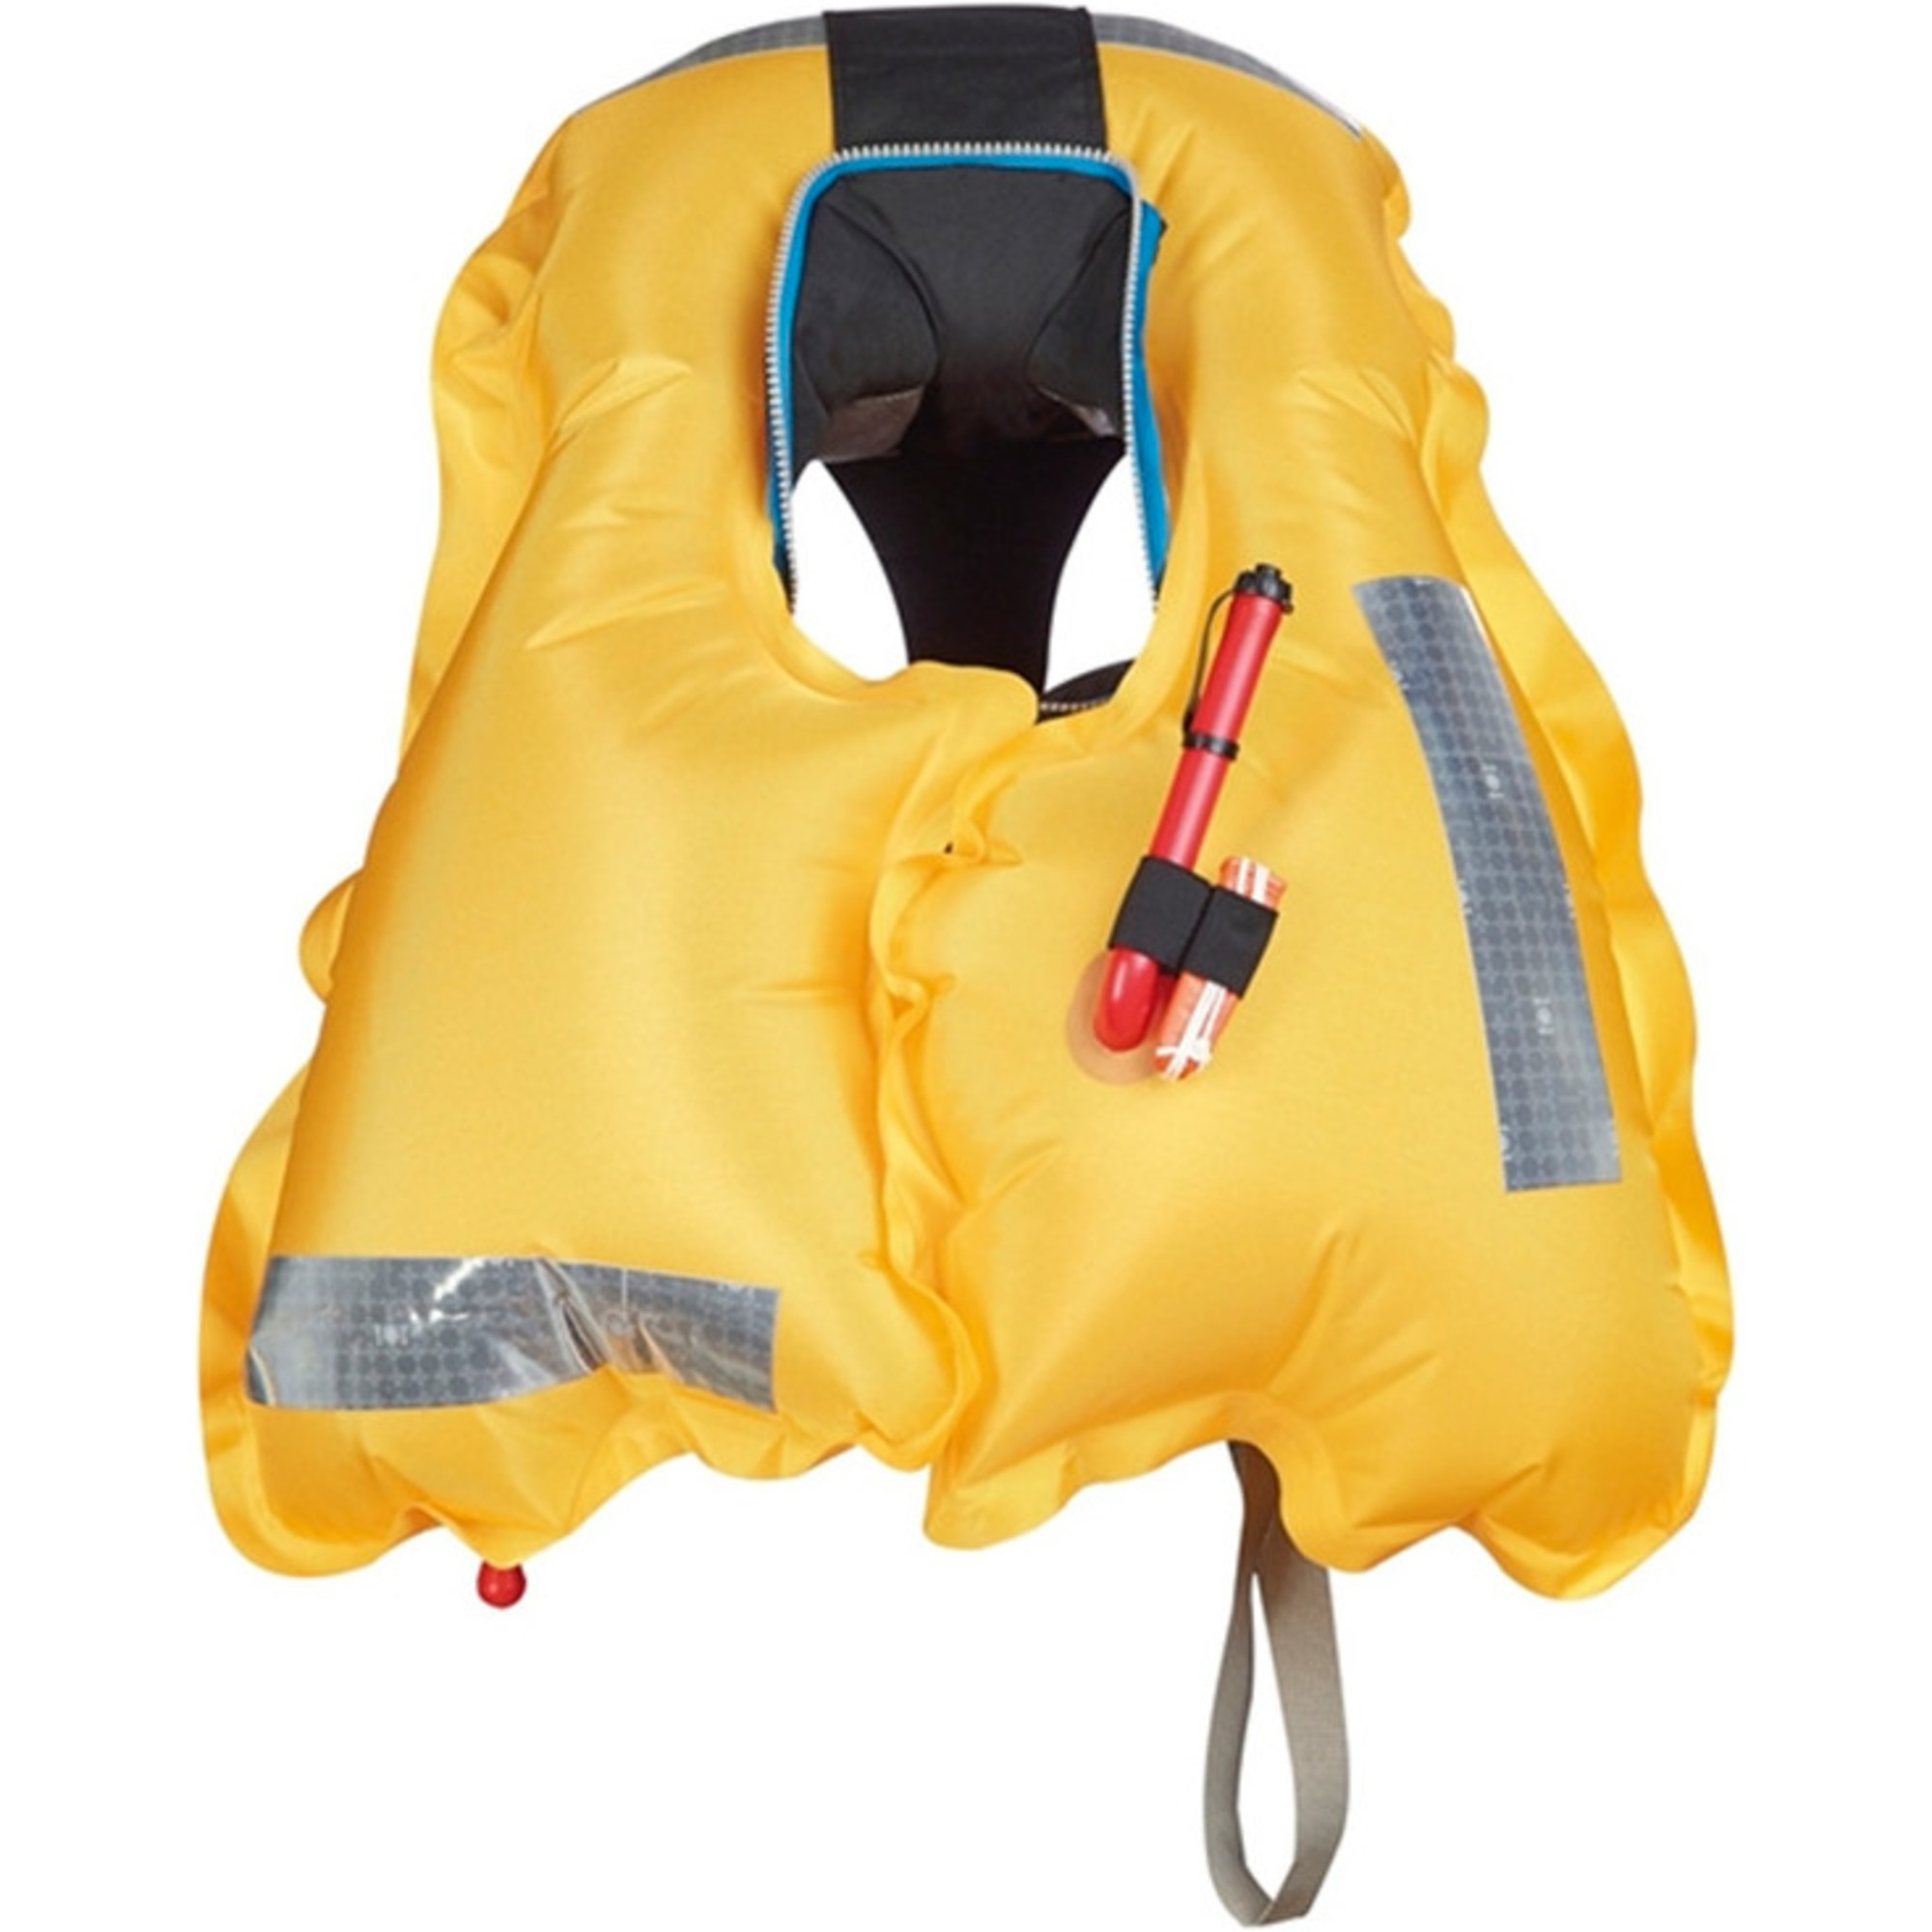 CREWFIT 180N PRO Automatic Lifejacket | Suffolk Marine Safety